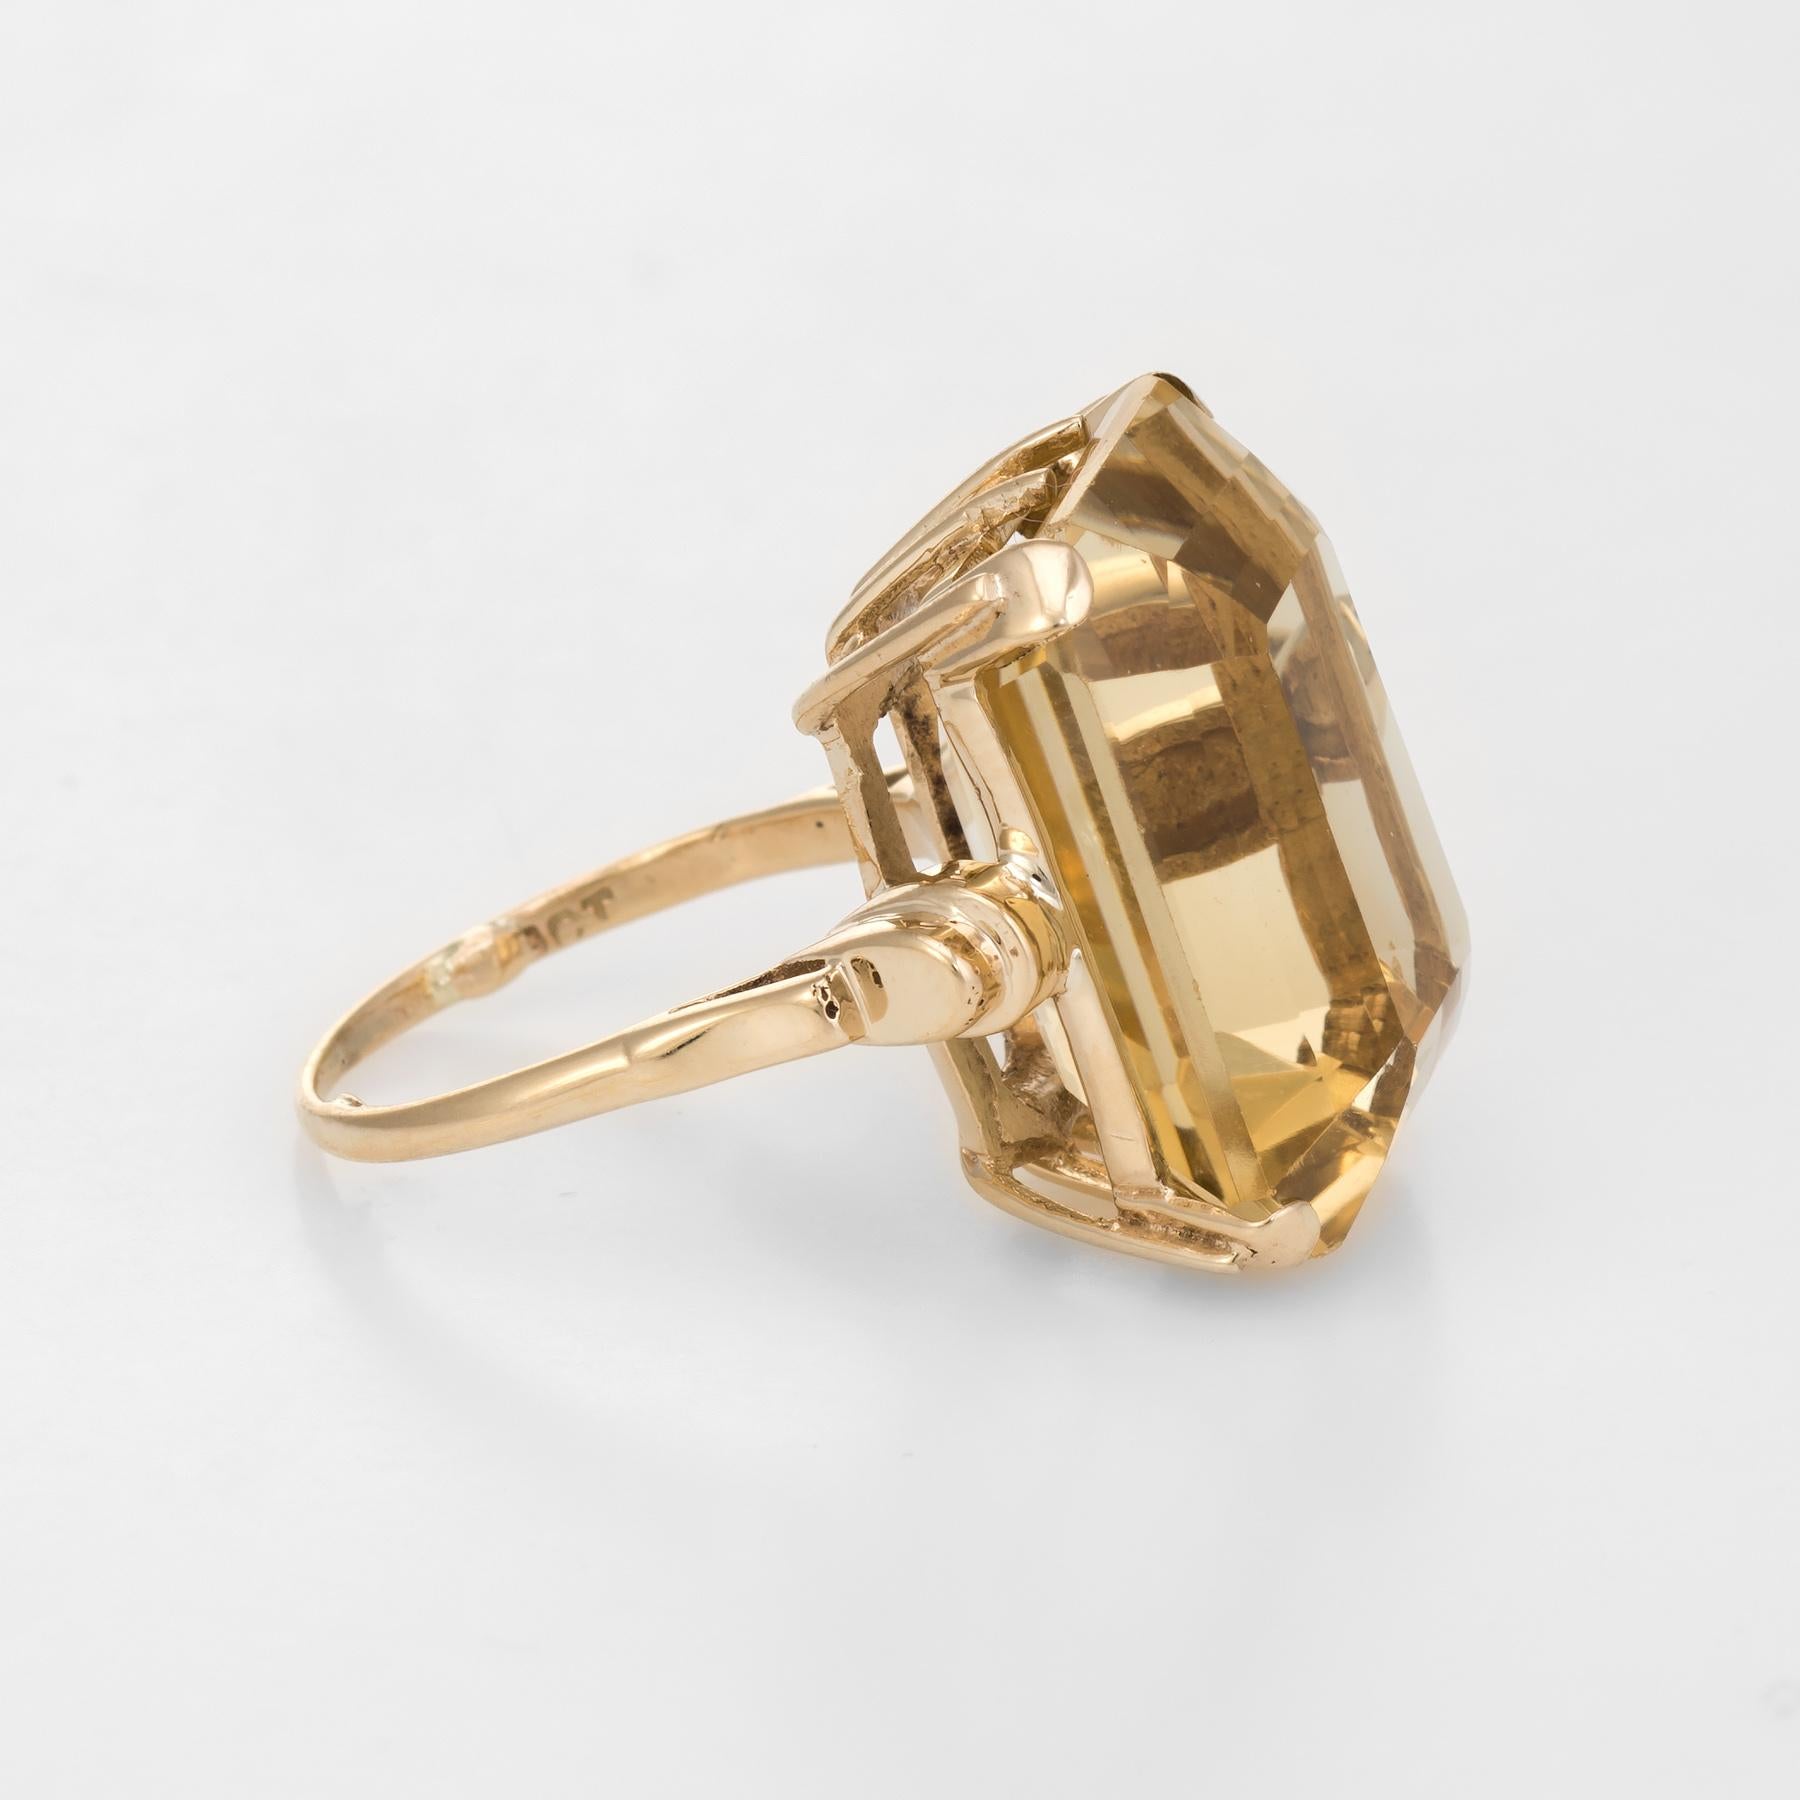 Retro Vintage Citrine Cocktail Ring 9 Karat Gold Large Emerald Cut Statement Ring